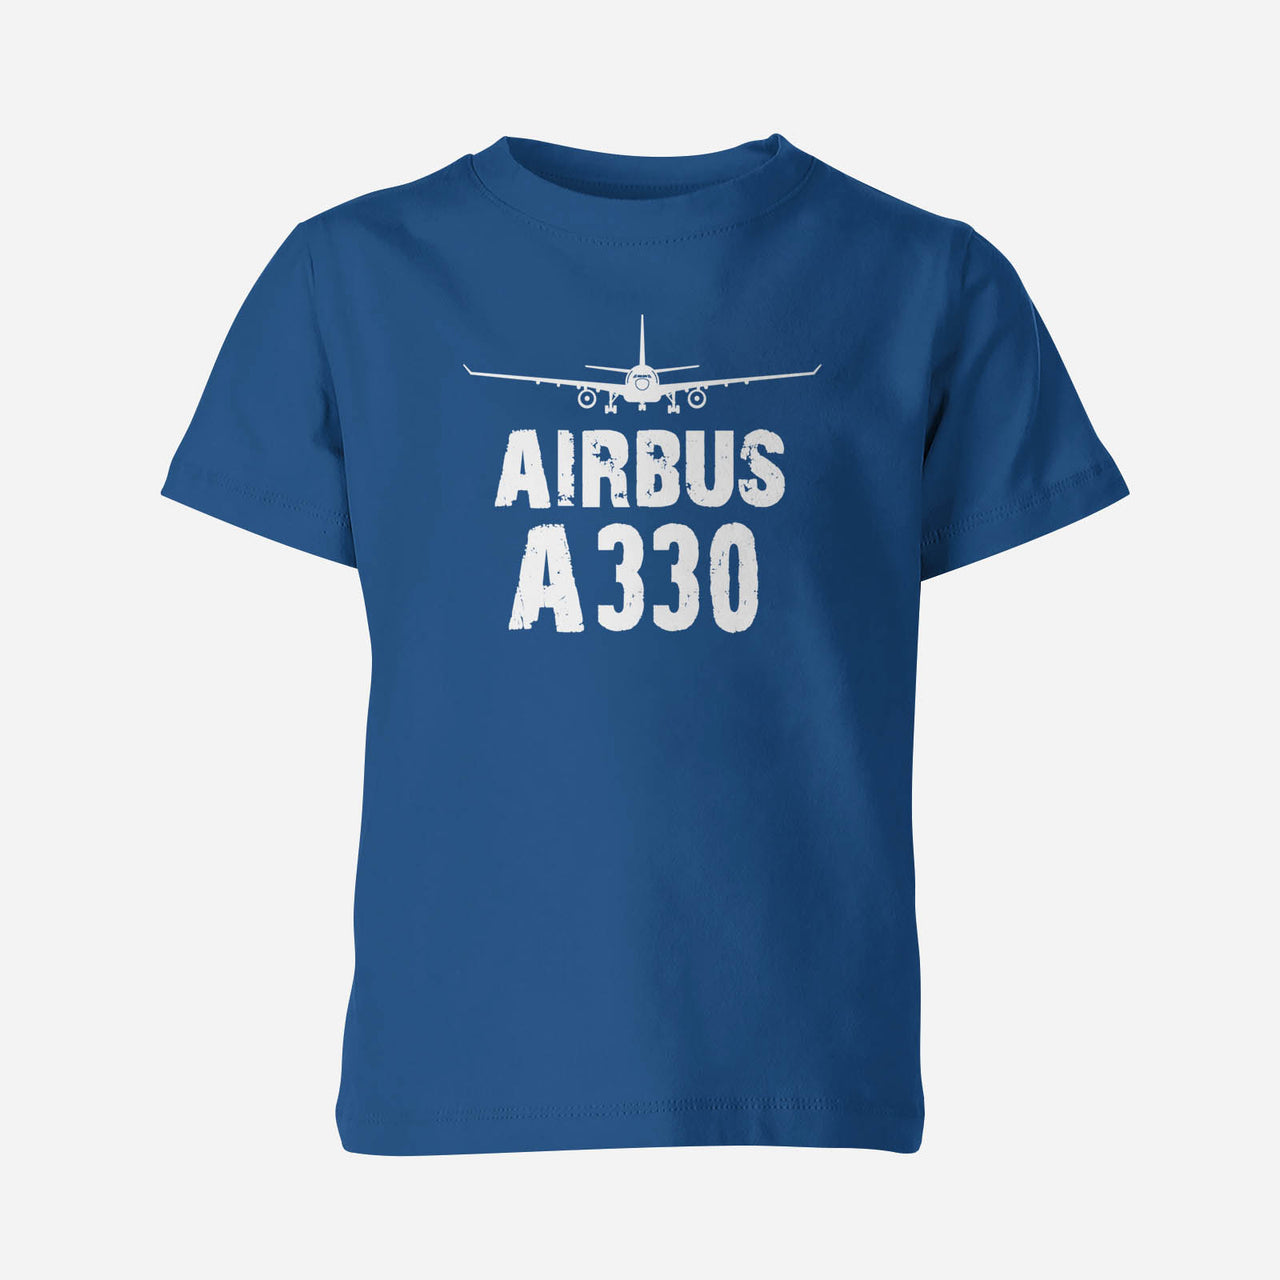 Airbus A330 & Plane Designed Children T-Shirts